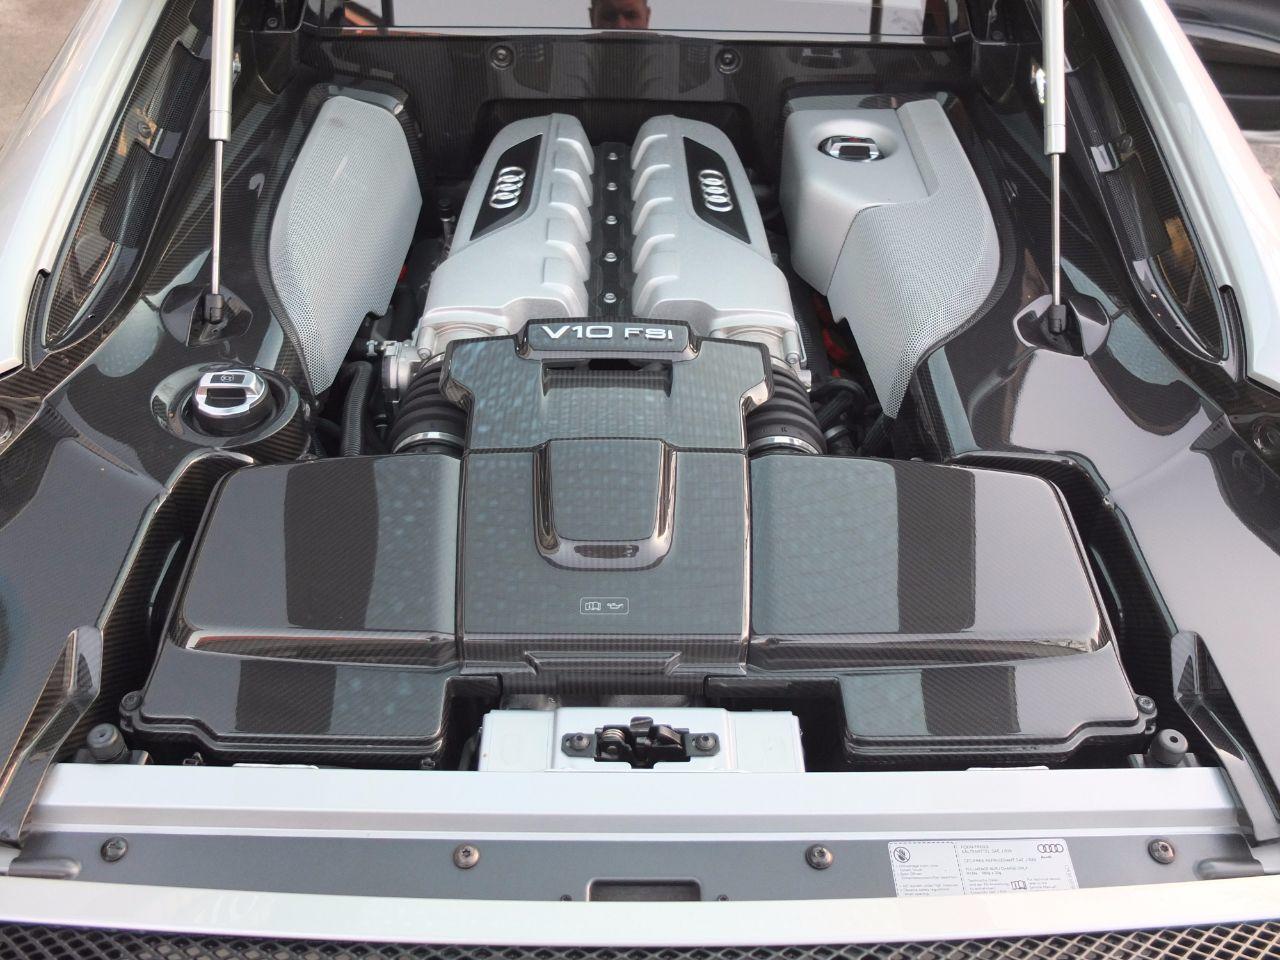 Audi R8 5.2 FSI [550] V10 Plus quattro S Tronic Coupe Petrol Ice Silver Metallic